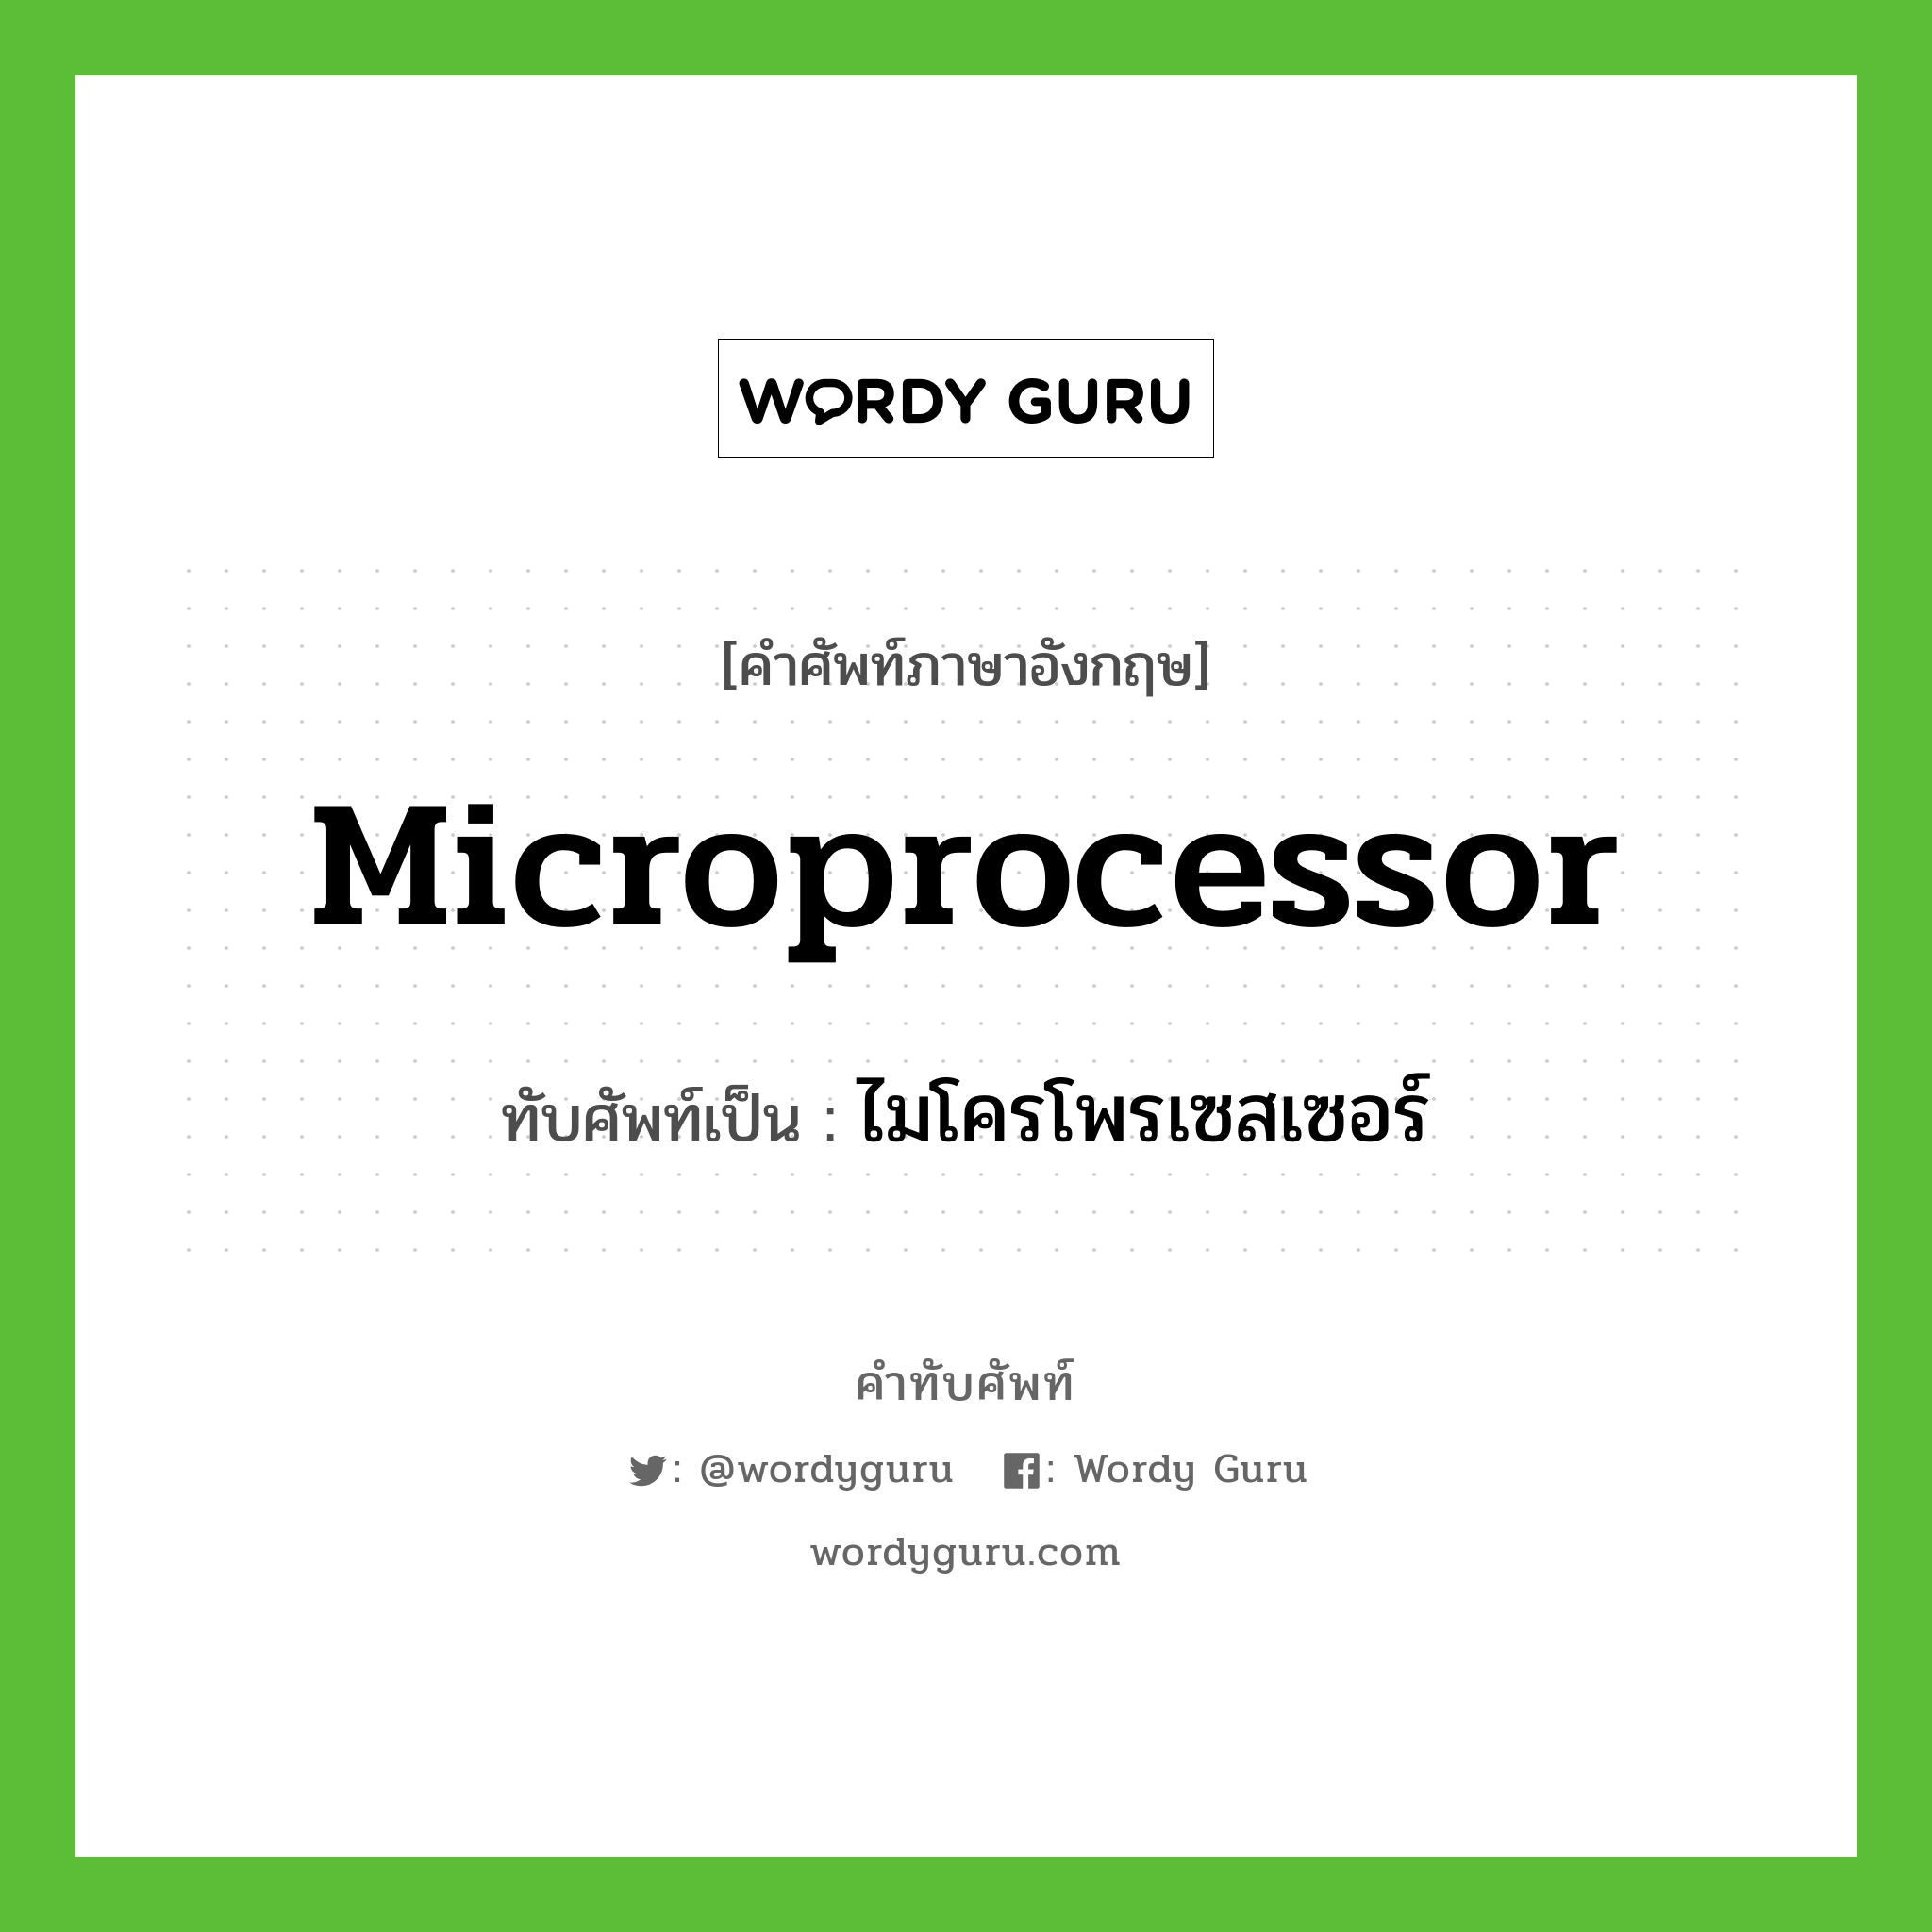 microprocessor เขียนเป็นคำไทยว่าอะไร?, คำศัพท์ภาษาอังกฤษ microprocessor ทับศัพท์เป็น ไมโครโพรเซสเซอร์